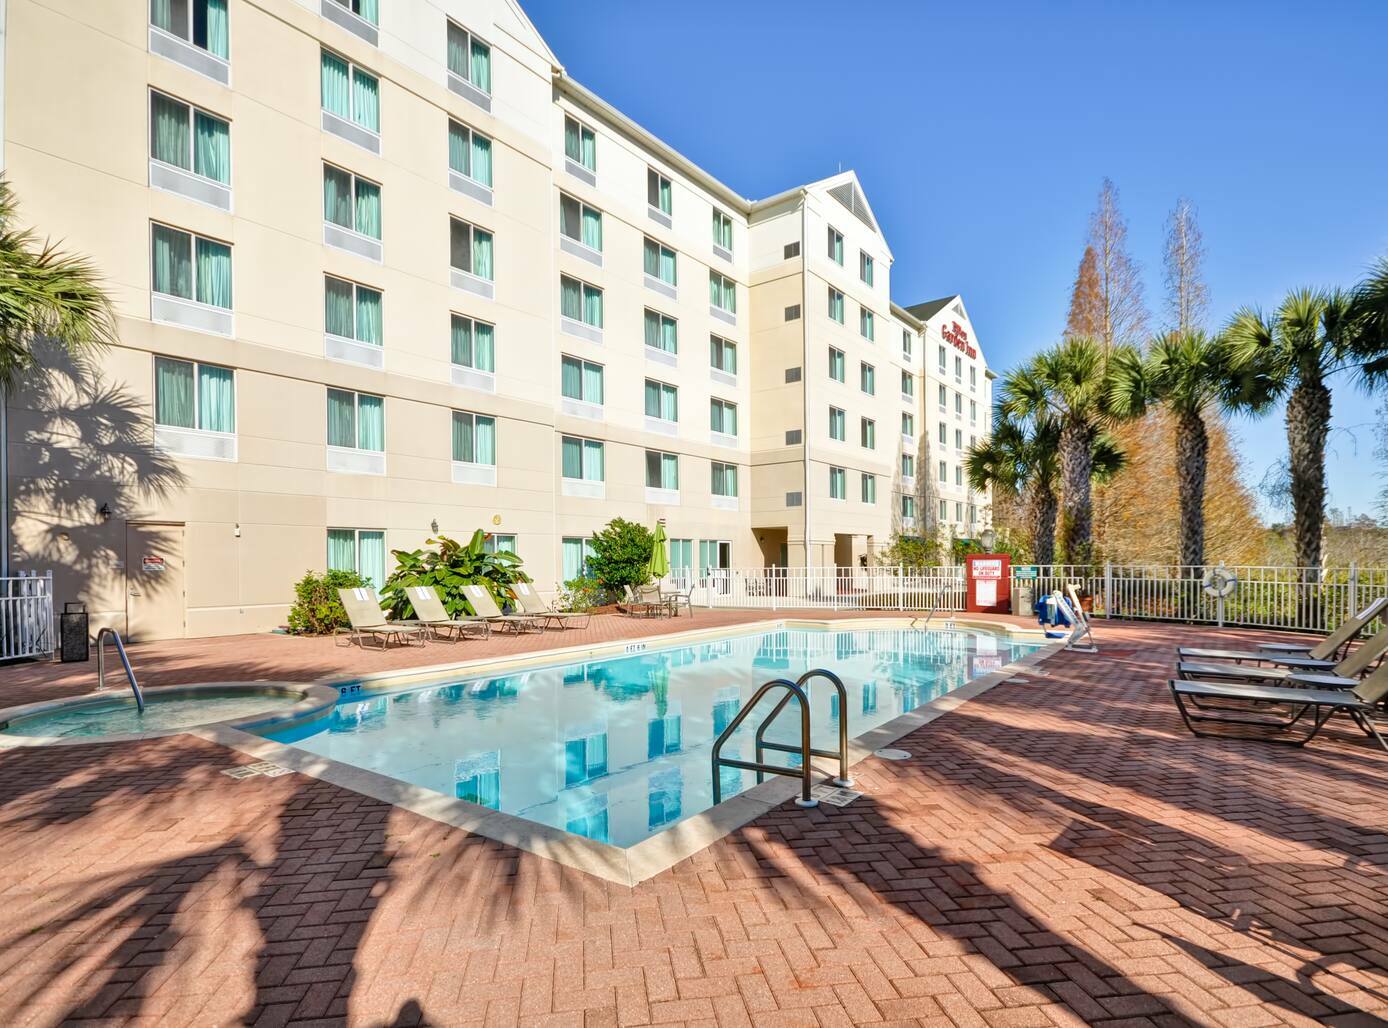 Photo of Hilton Garden Inn Tampa North, Temple Terrace, FL